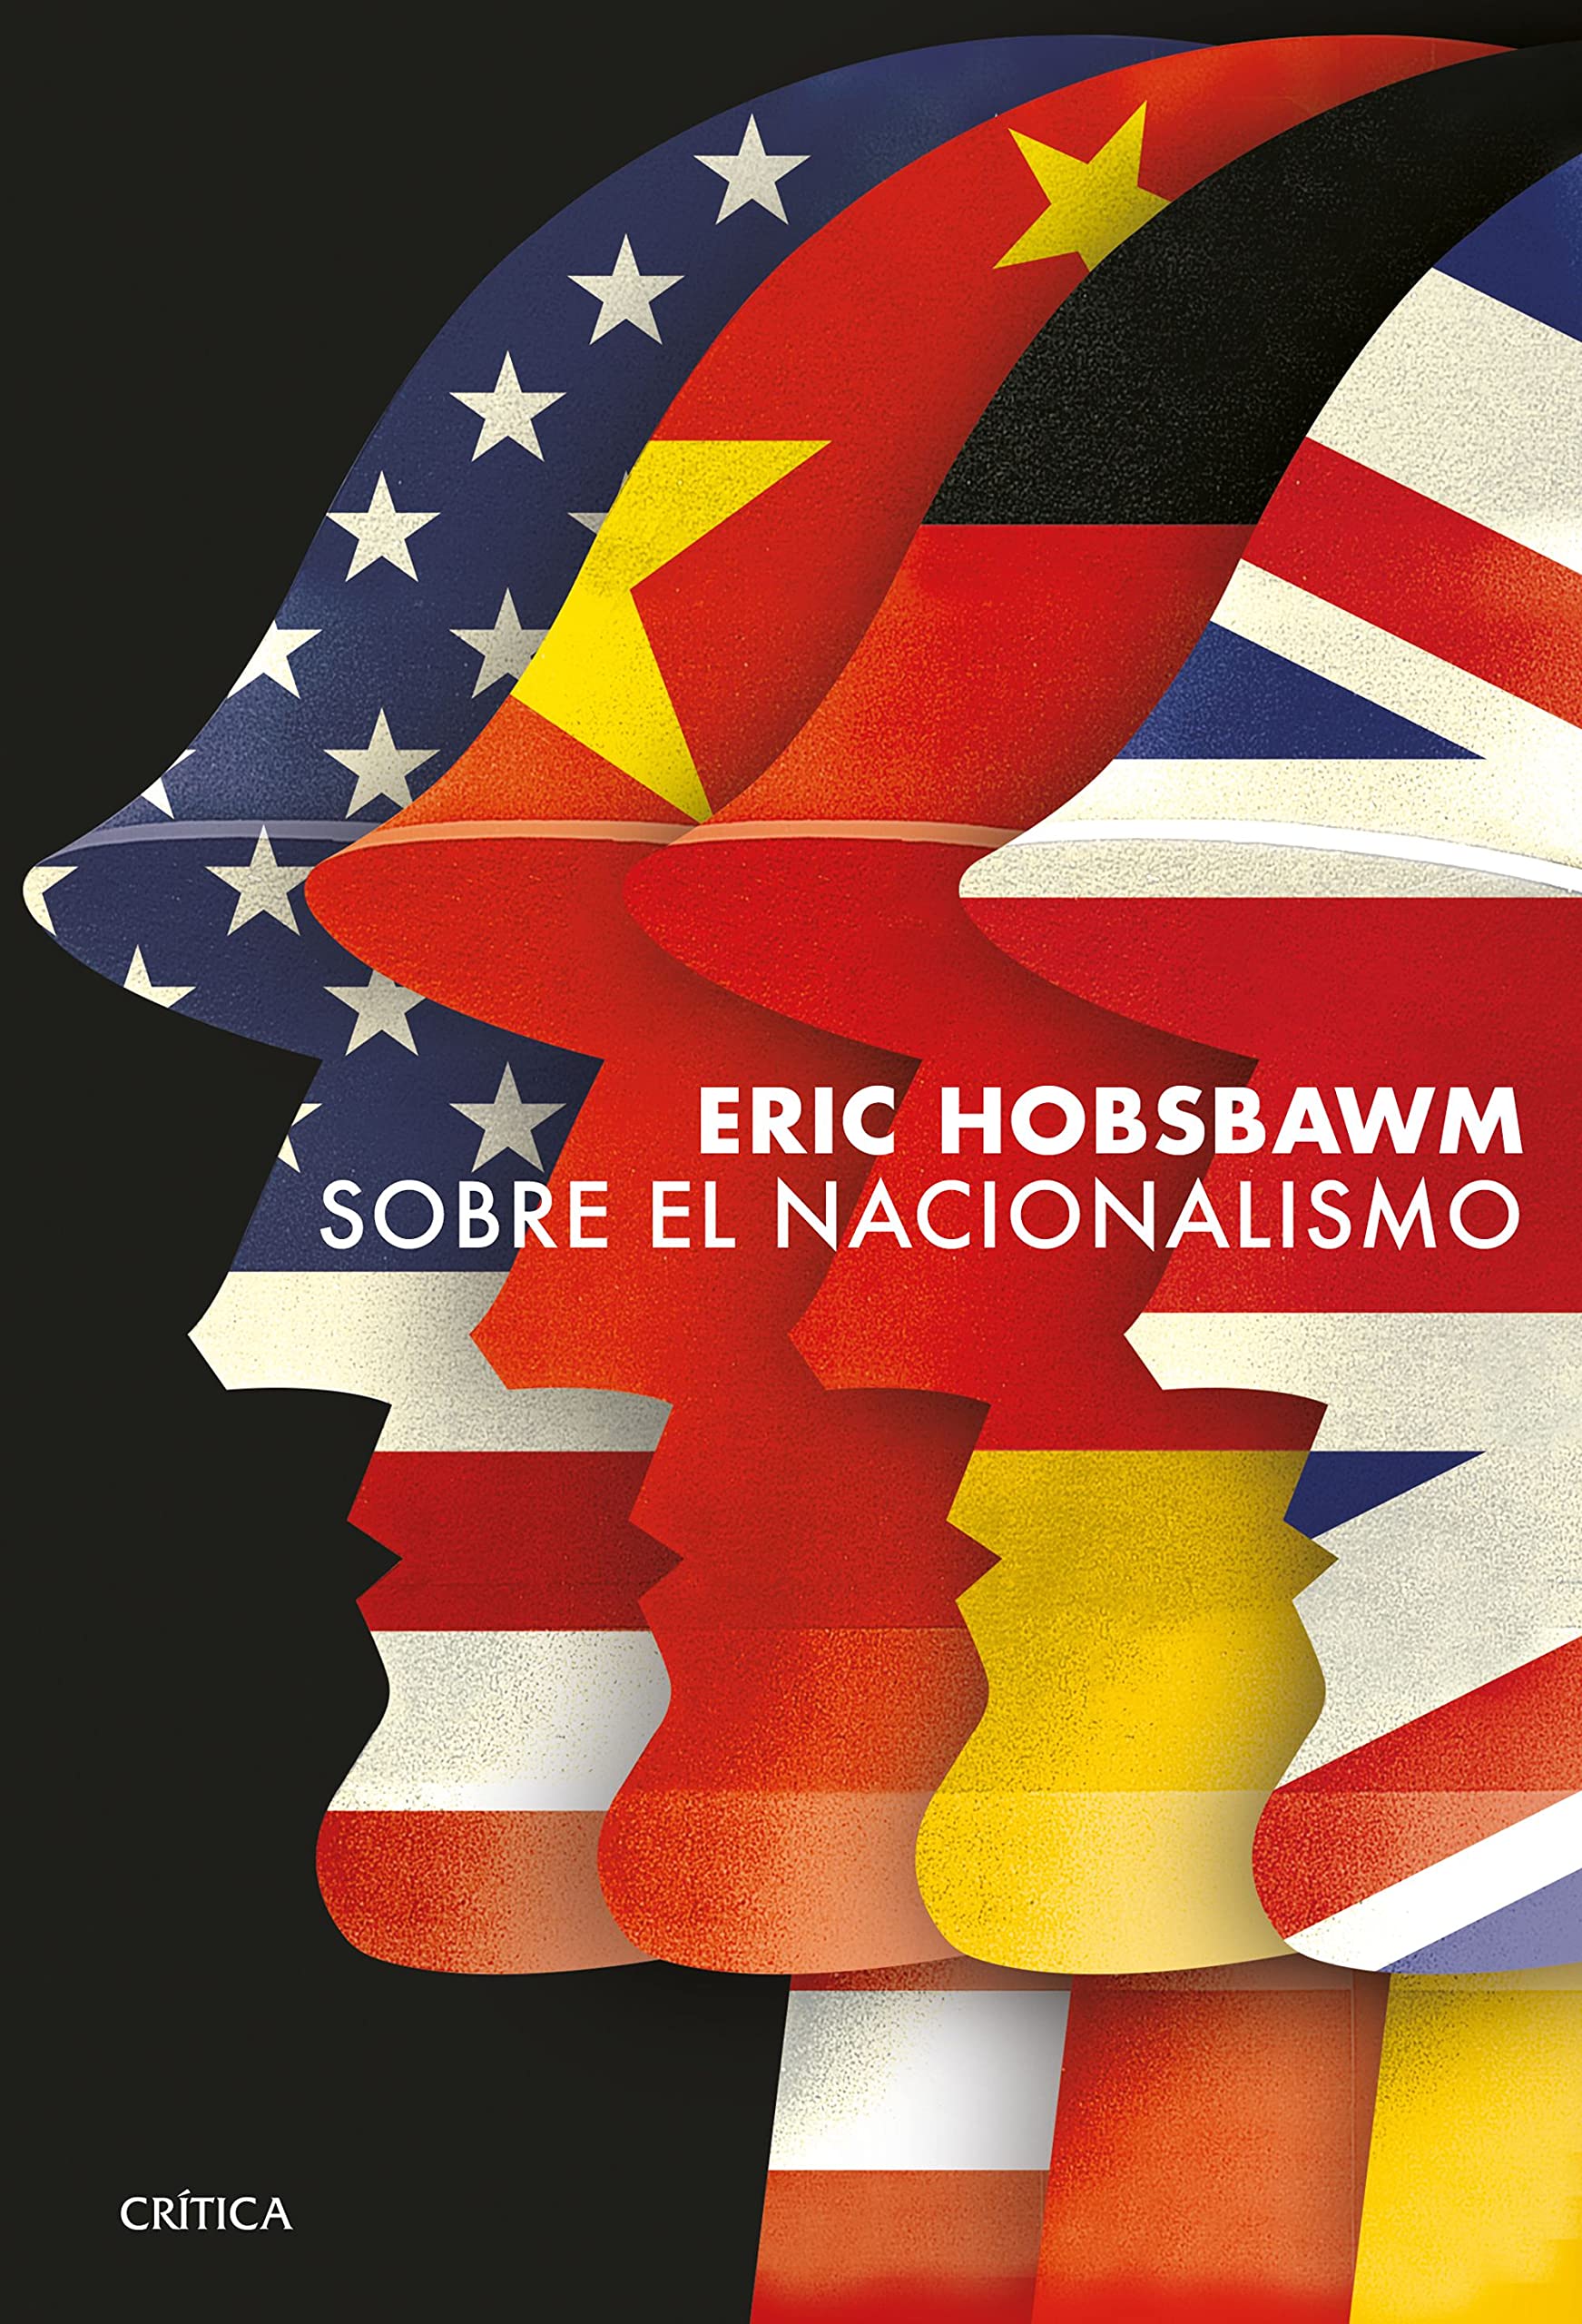 Eric Hobsbawm: Sobre el Nacionalismo (Spanish language, 2022, Editorial Planeta, S. A.)